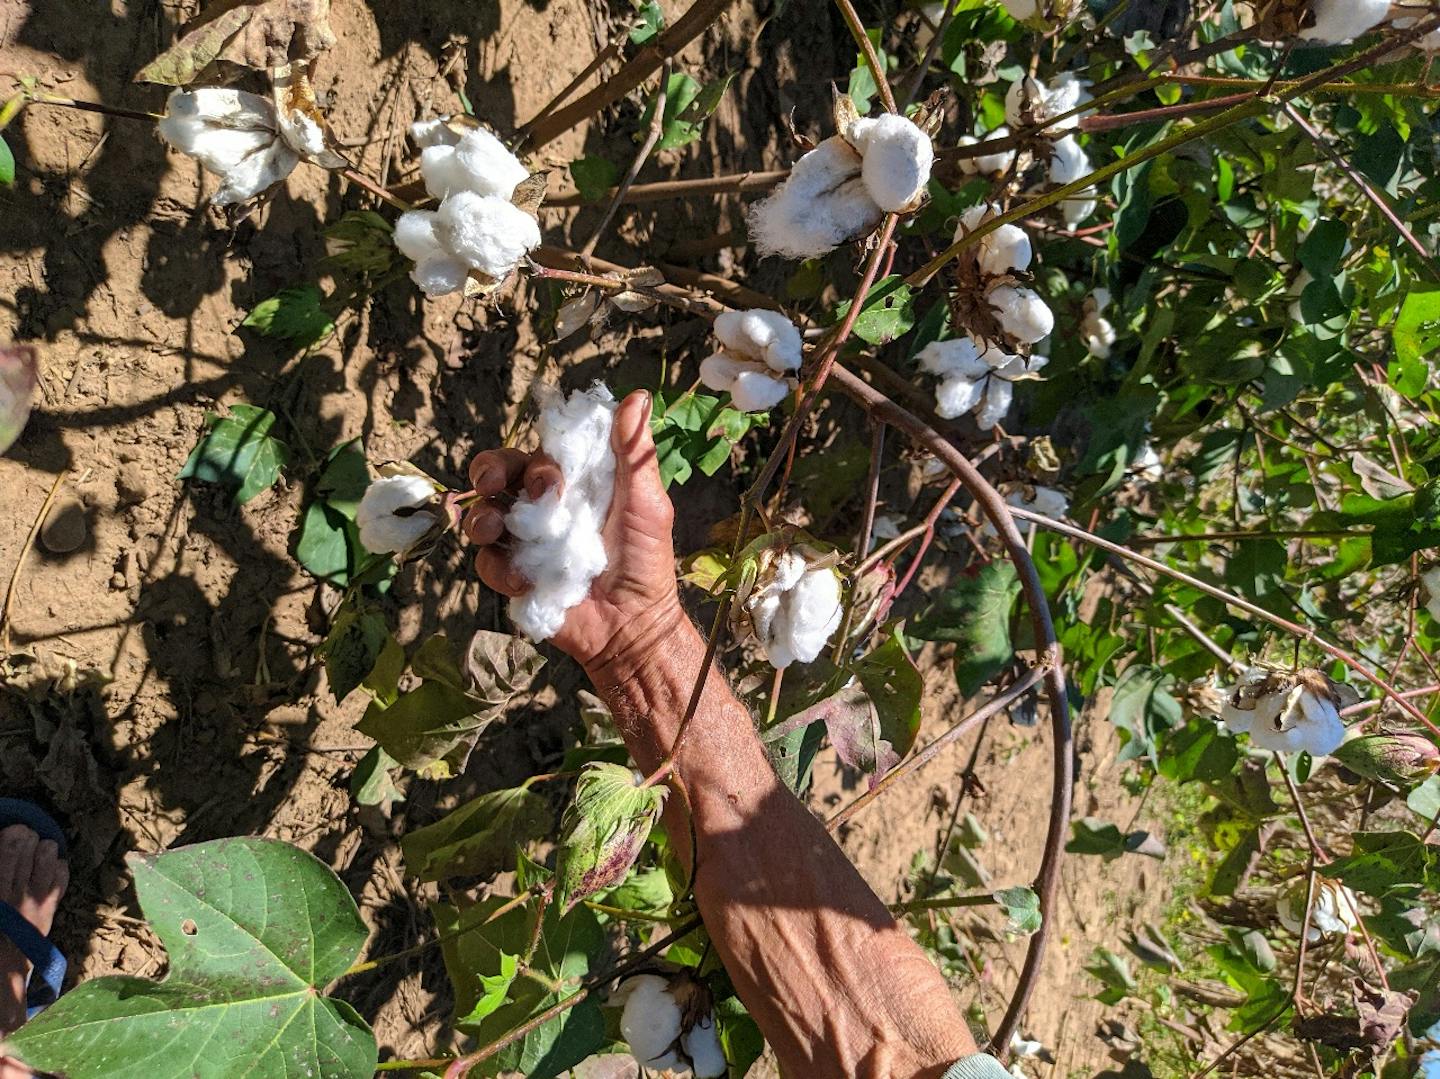 How Brazilian farmers grow sustainable organic cotton through agroecology